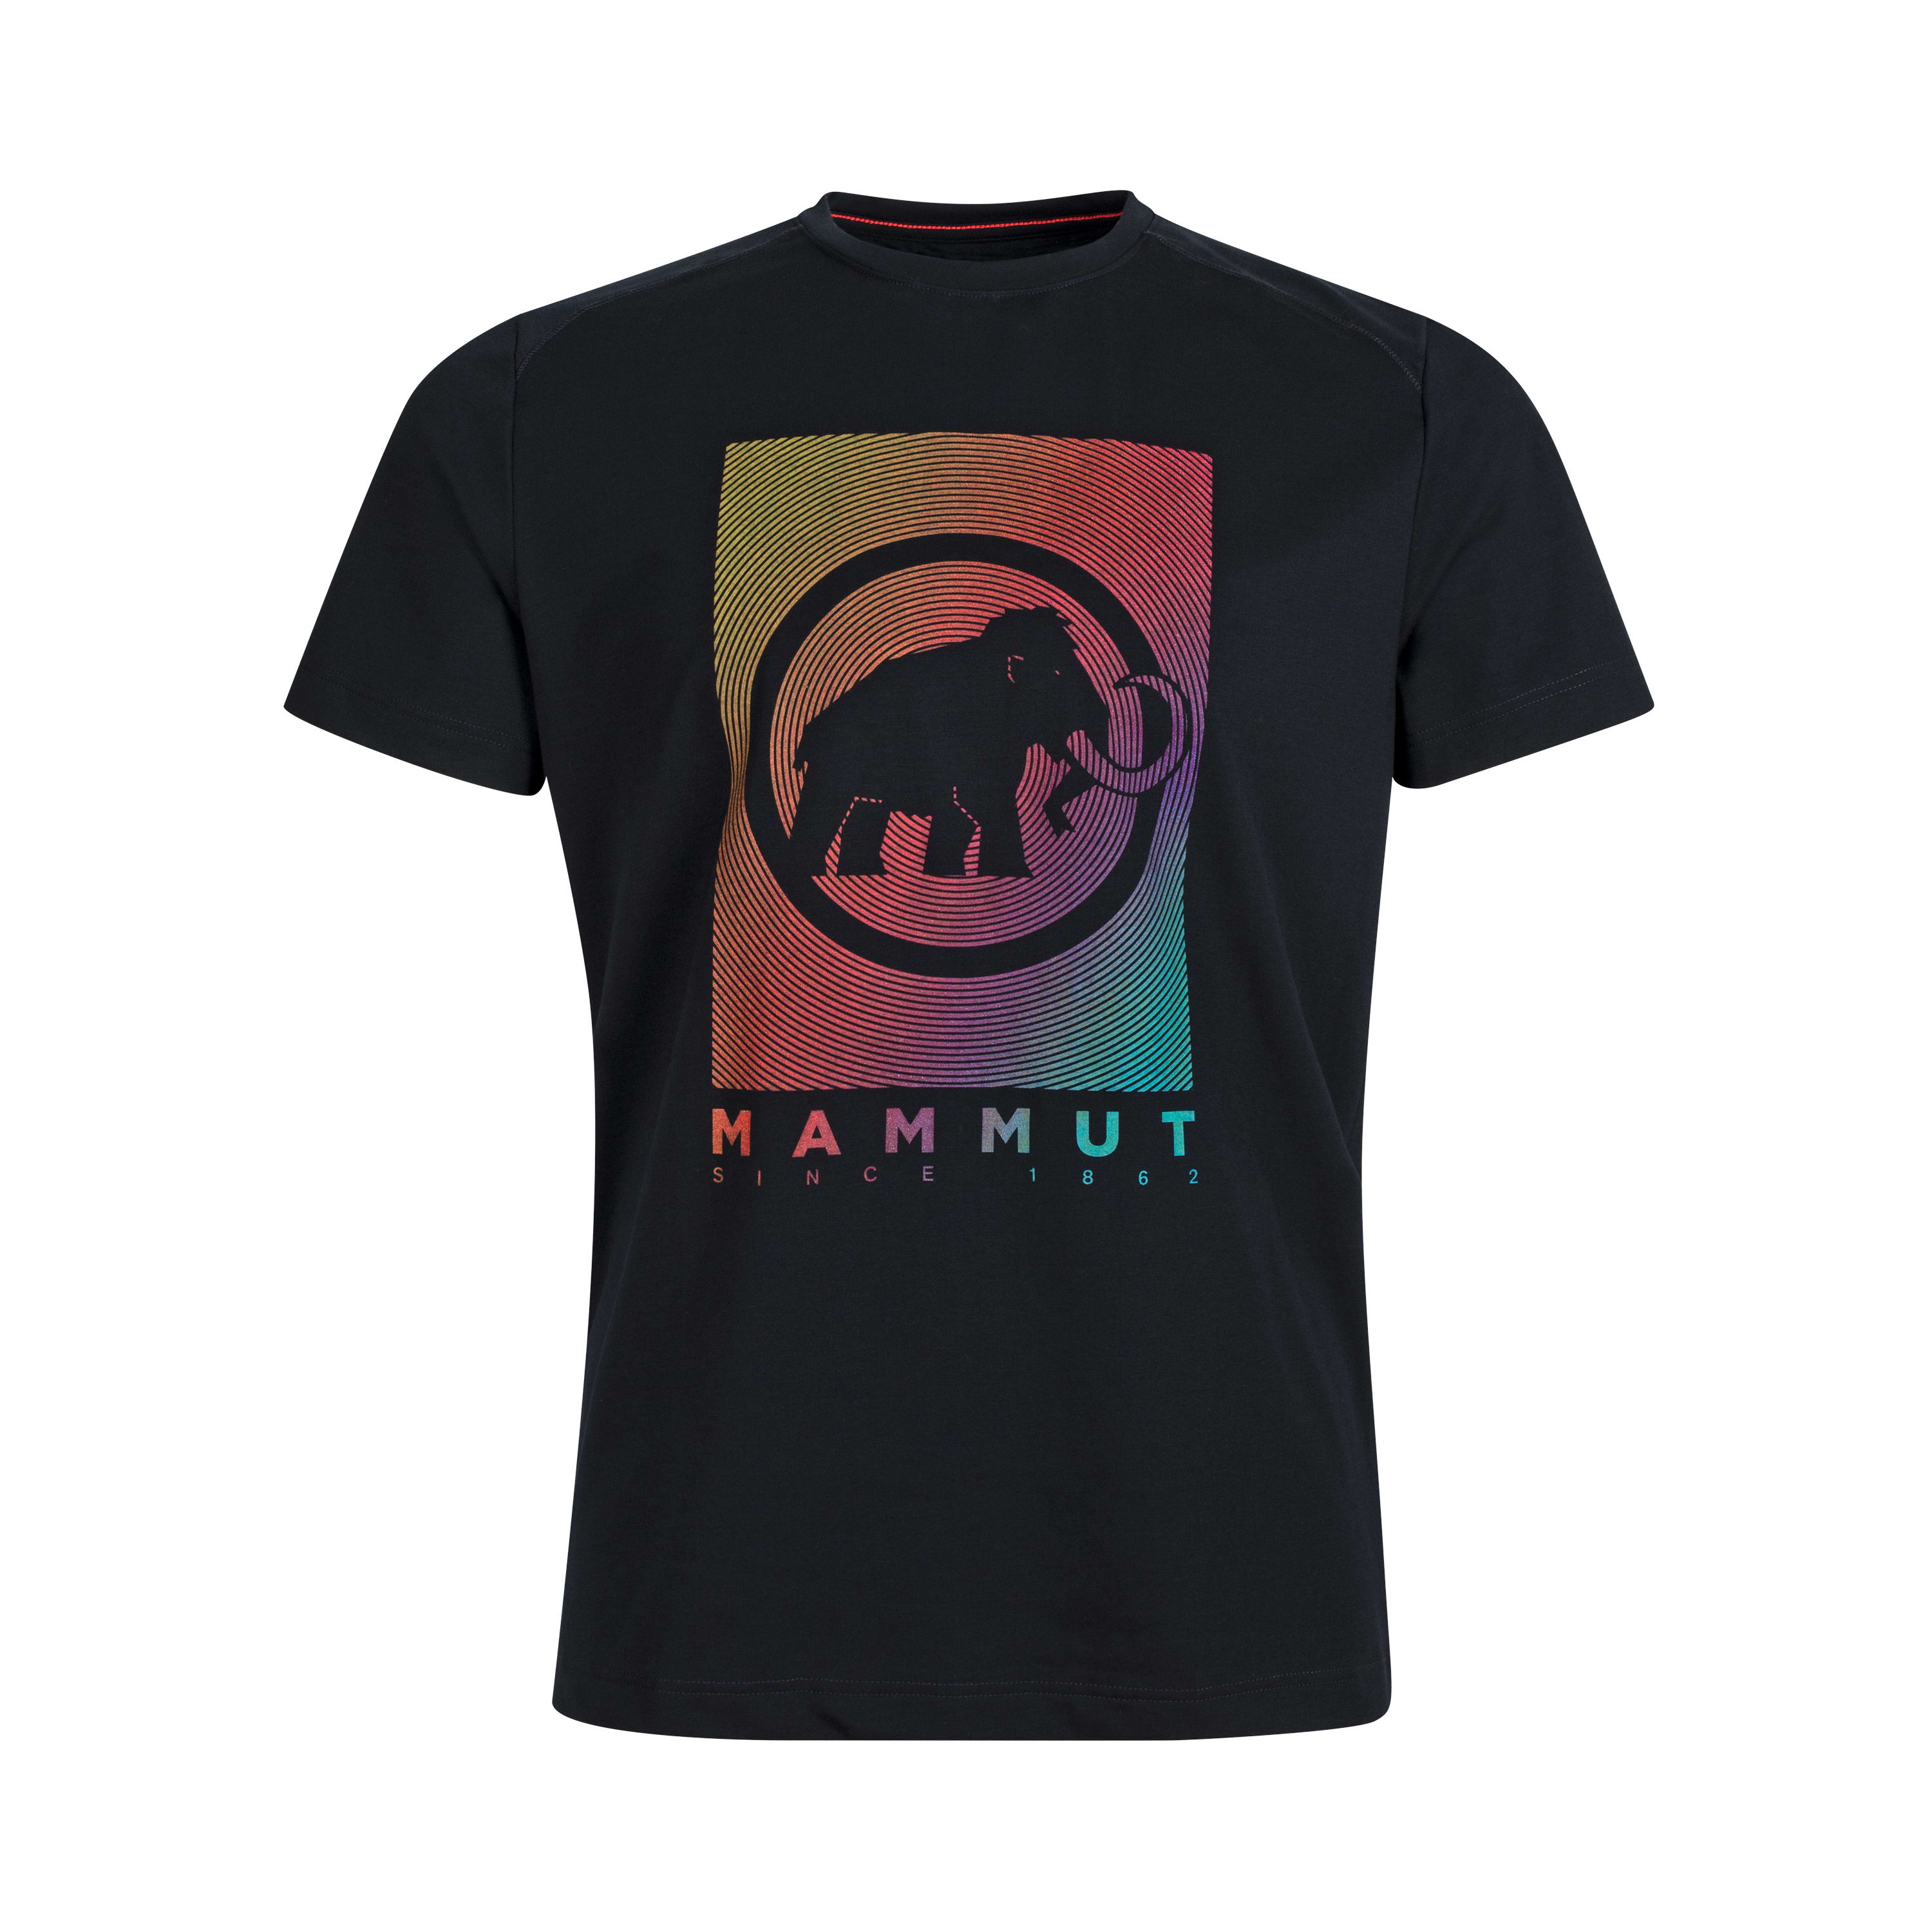 Mammut Trovat T-shirt Men's - Outnorth